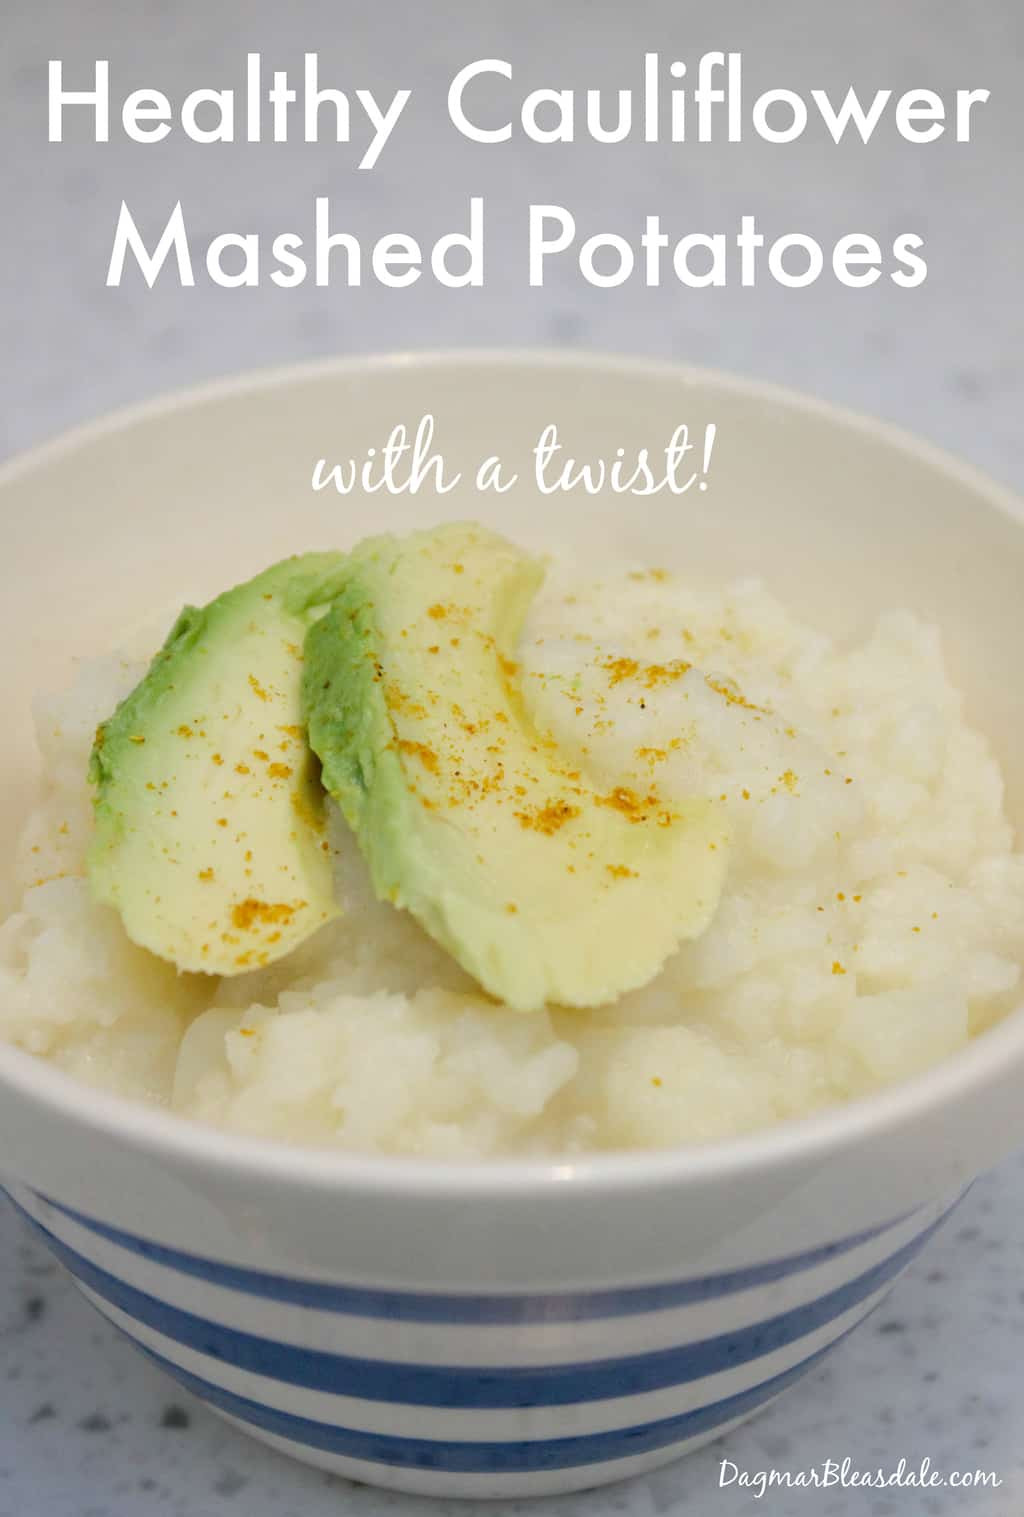 Healthy Cauliflower Mashed Potatoes
 Healthy Cauliflower Mashed Potatoes Recipe With a Twist